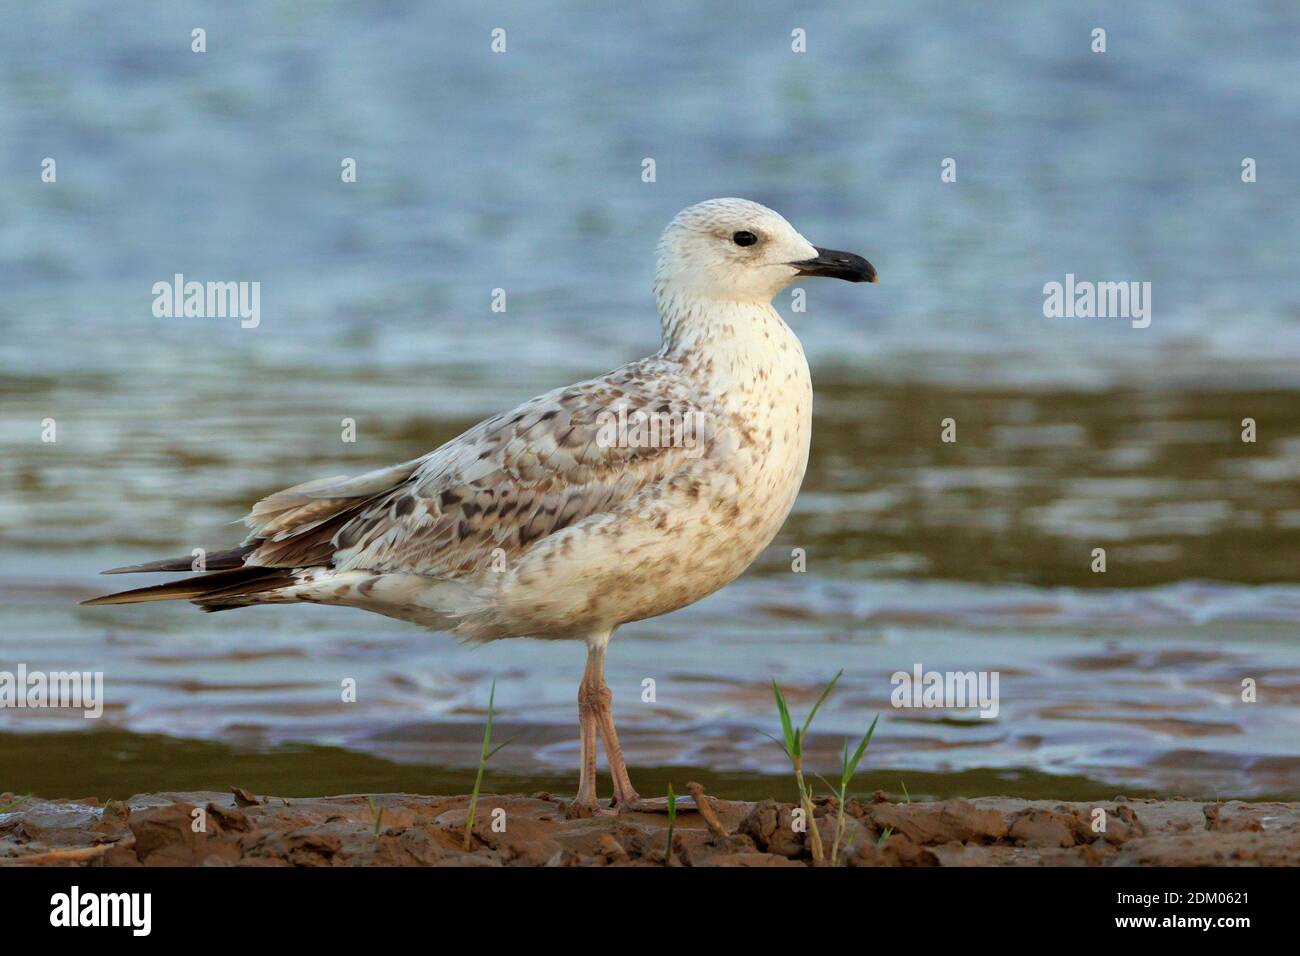 Immature Armenian Gull standing on the ground. Stock Photo